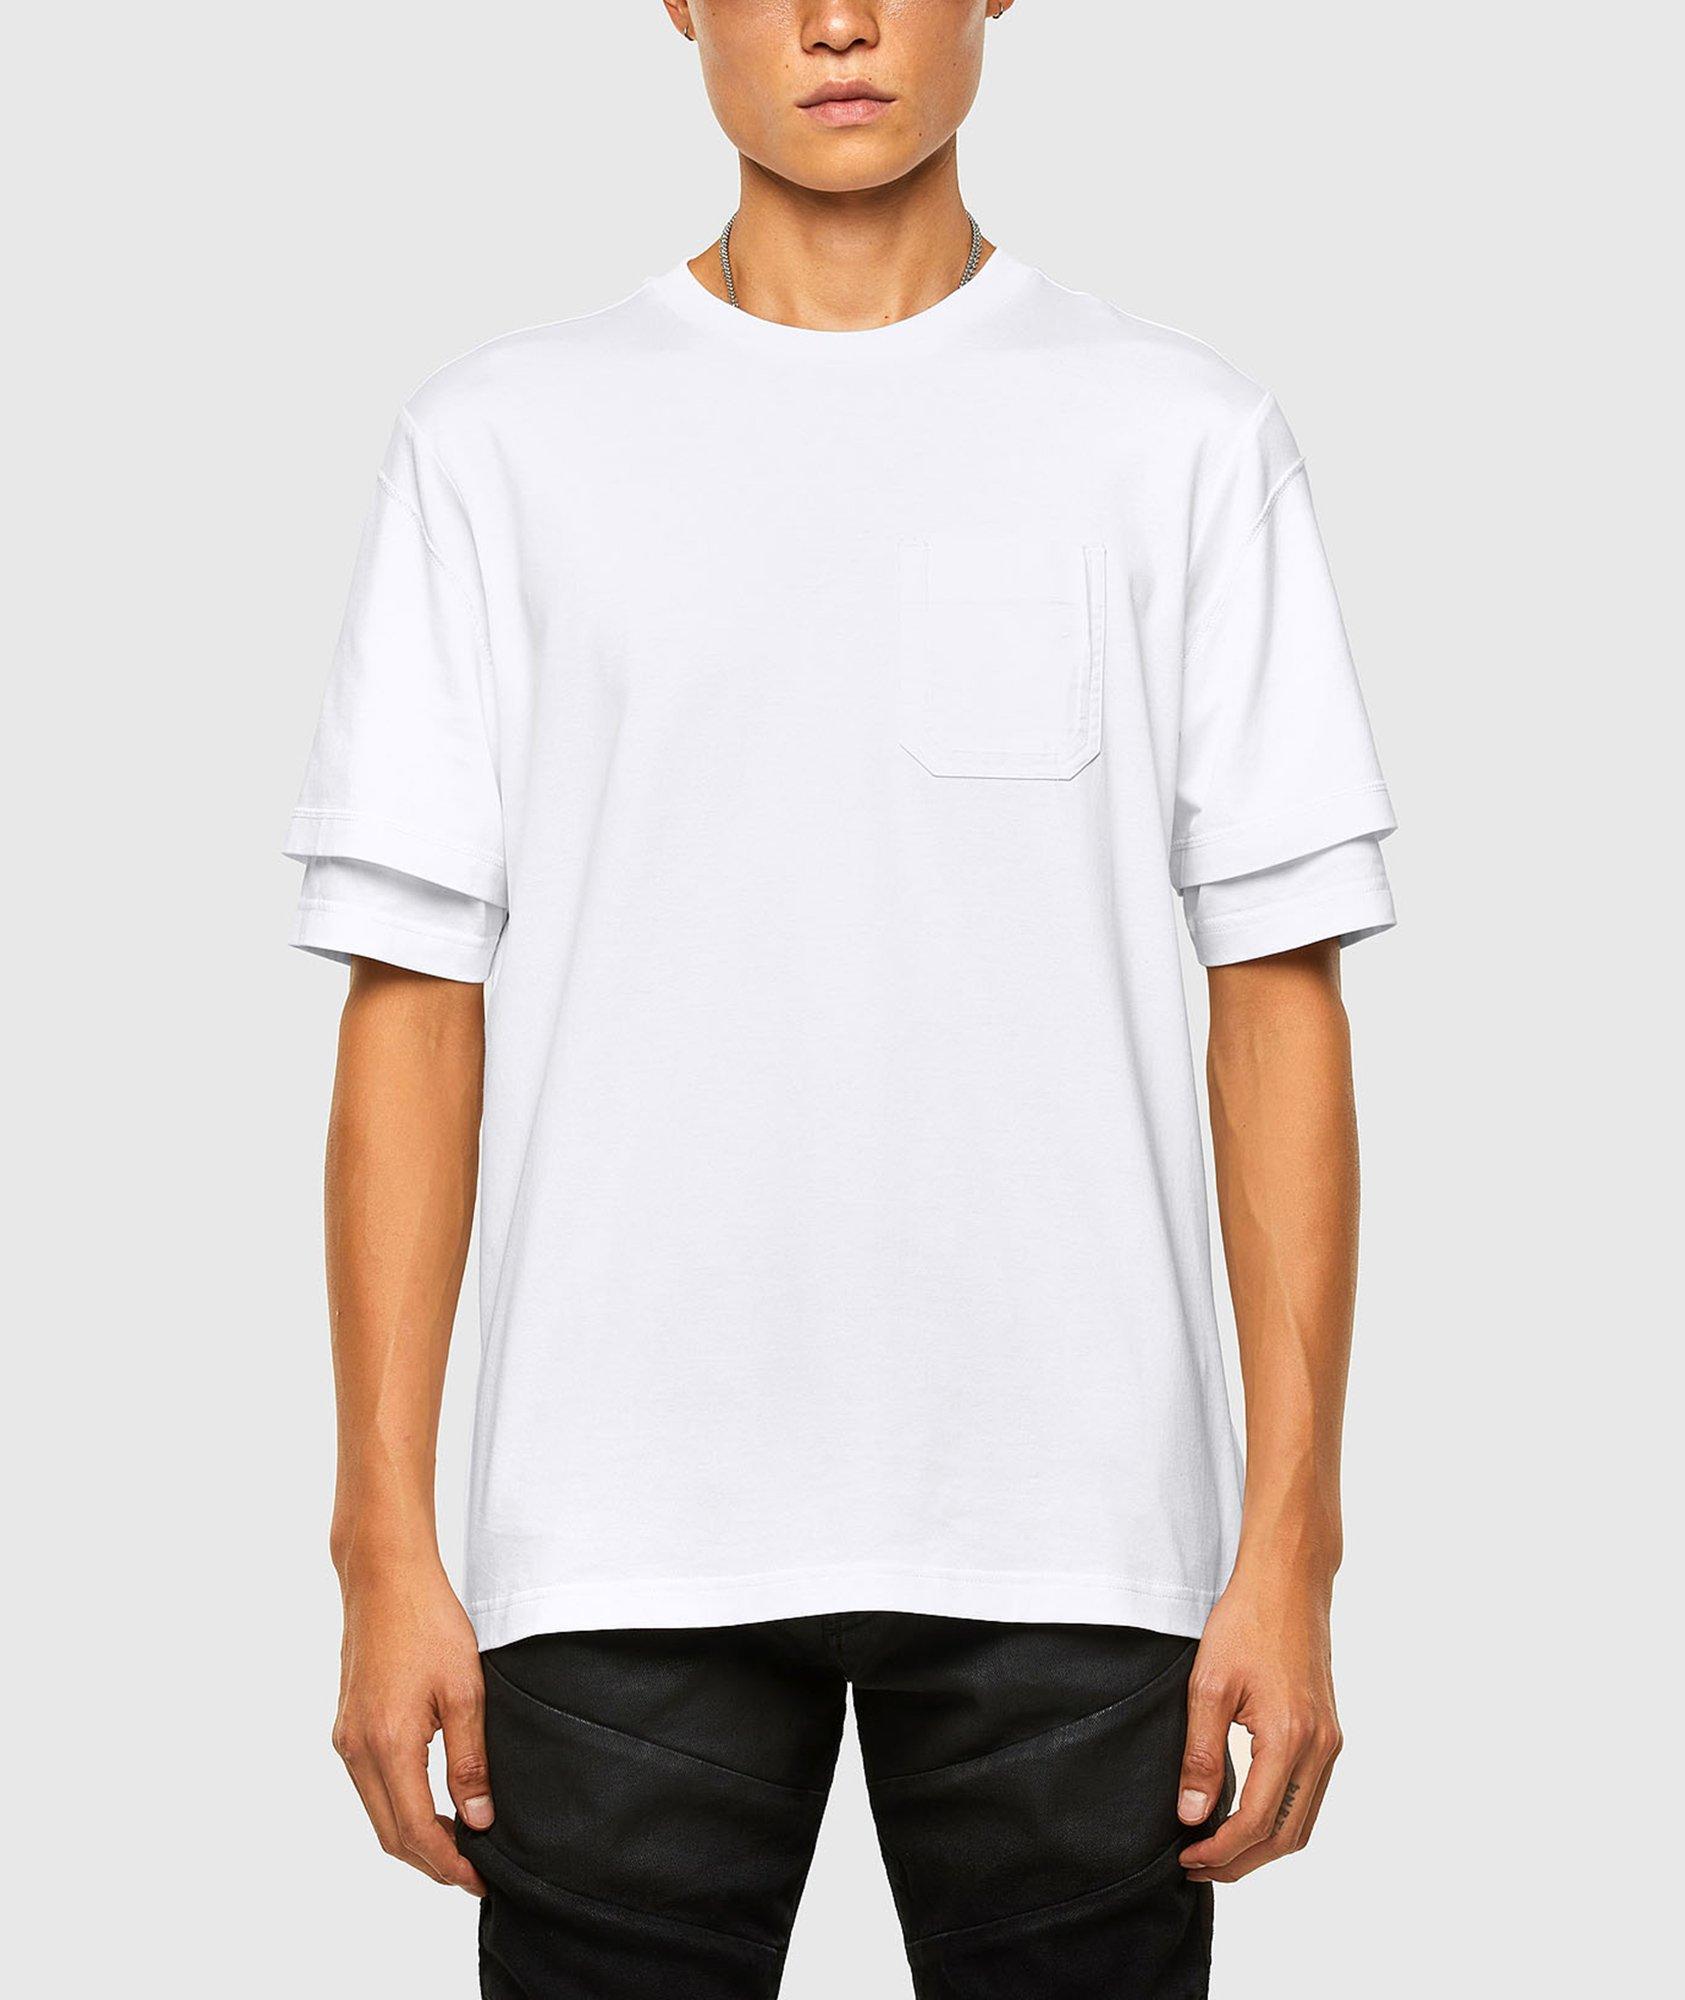 Supima Cotton T-Shirt image 0